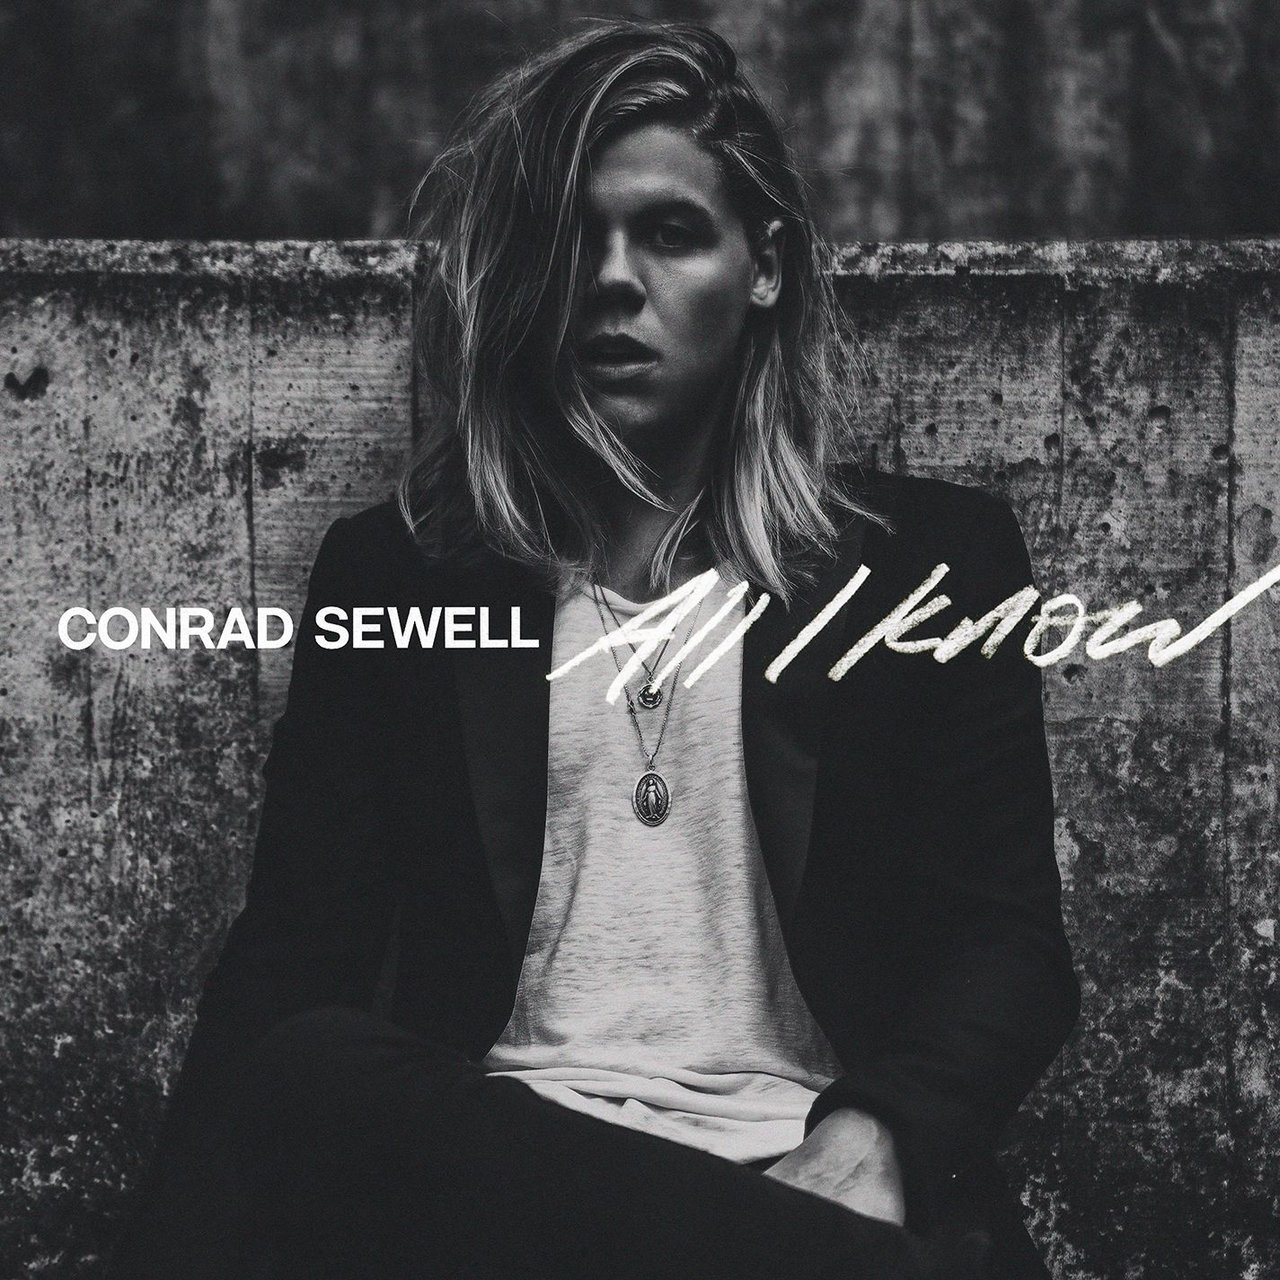 Conrad Sewell — Wandering cover artwork